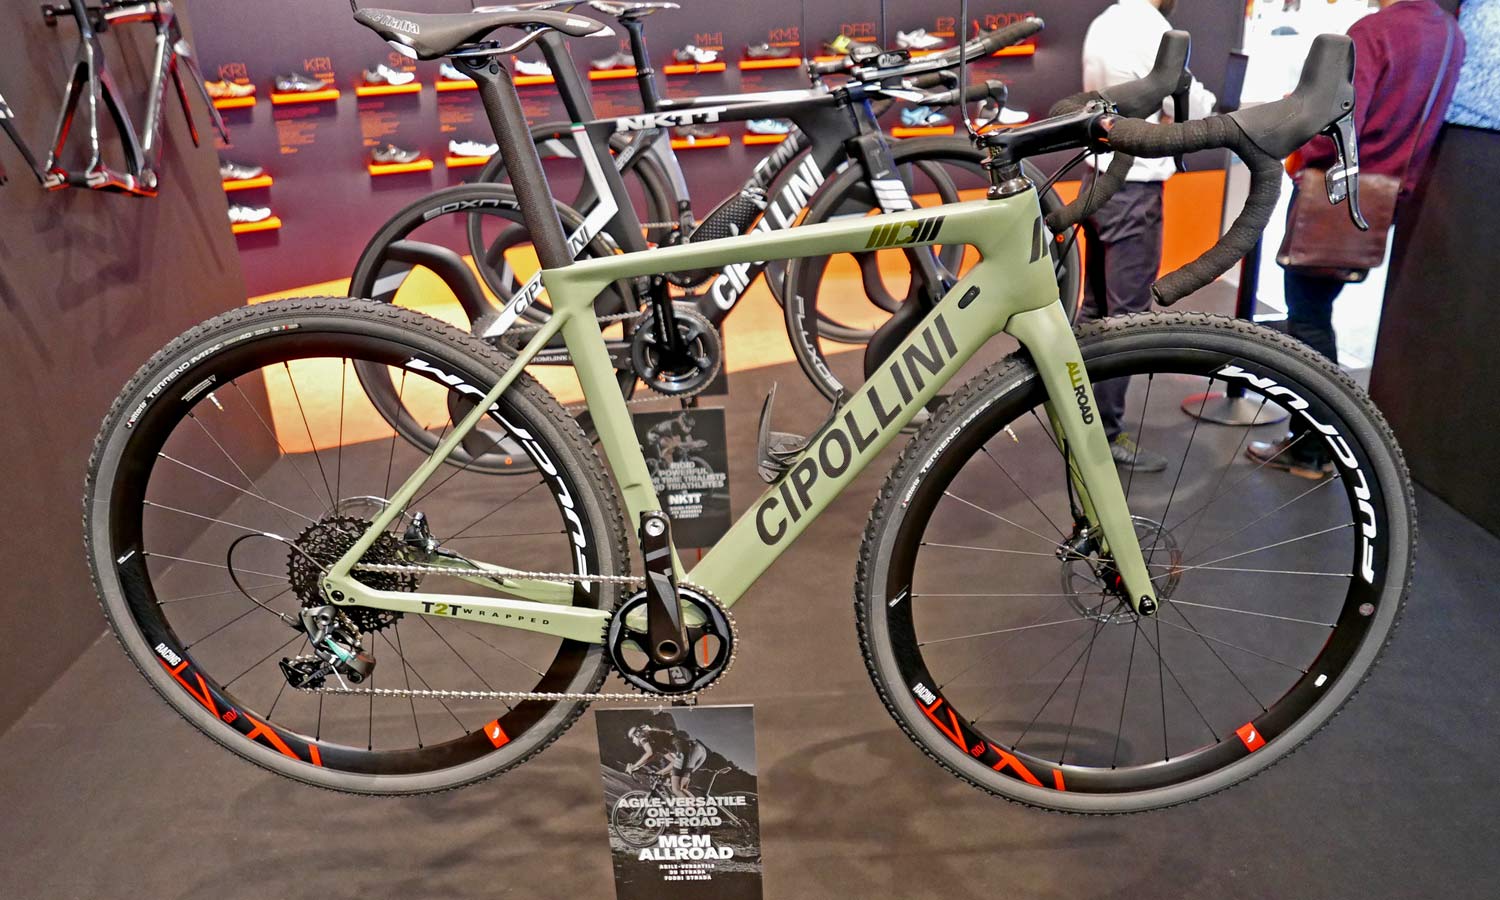 Cipollini-MCM Allroad, carbon mixed-surface gravel bike all-road bike frameset